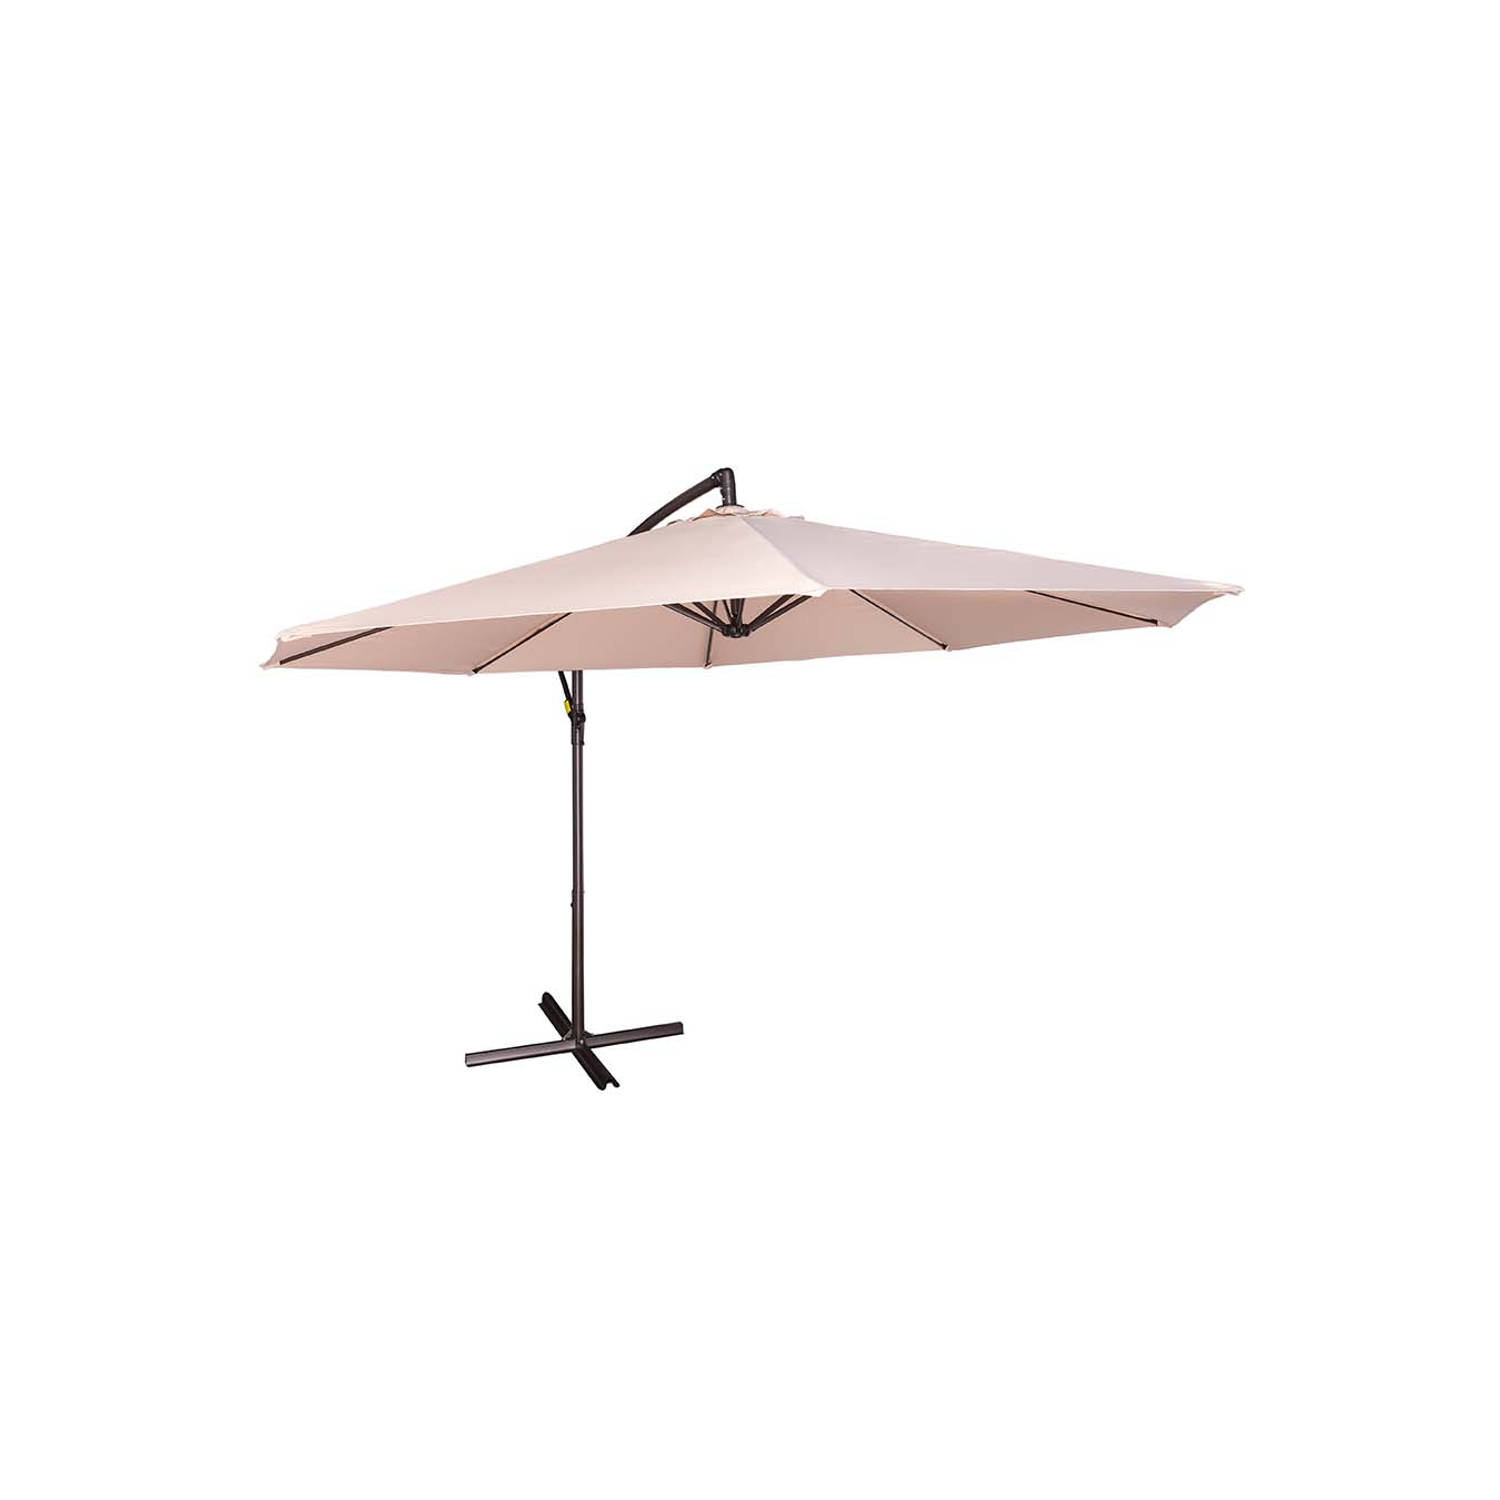 Feel Furniture - Toscano - Banana parasol - Beige